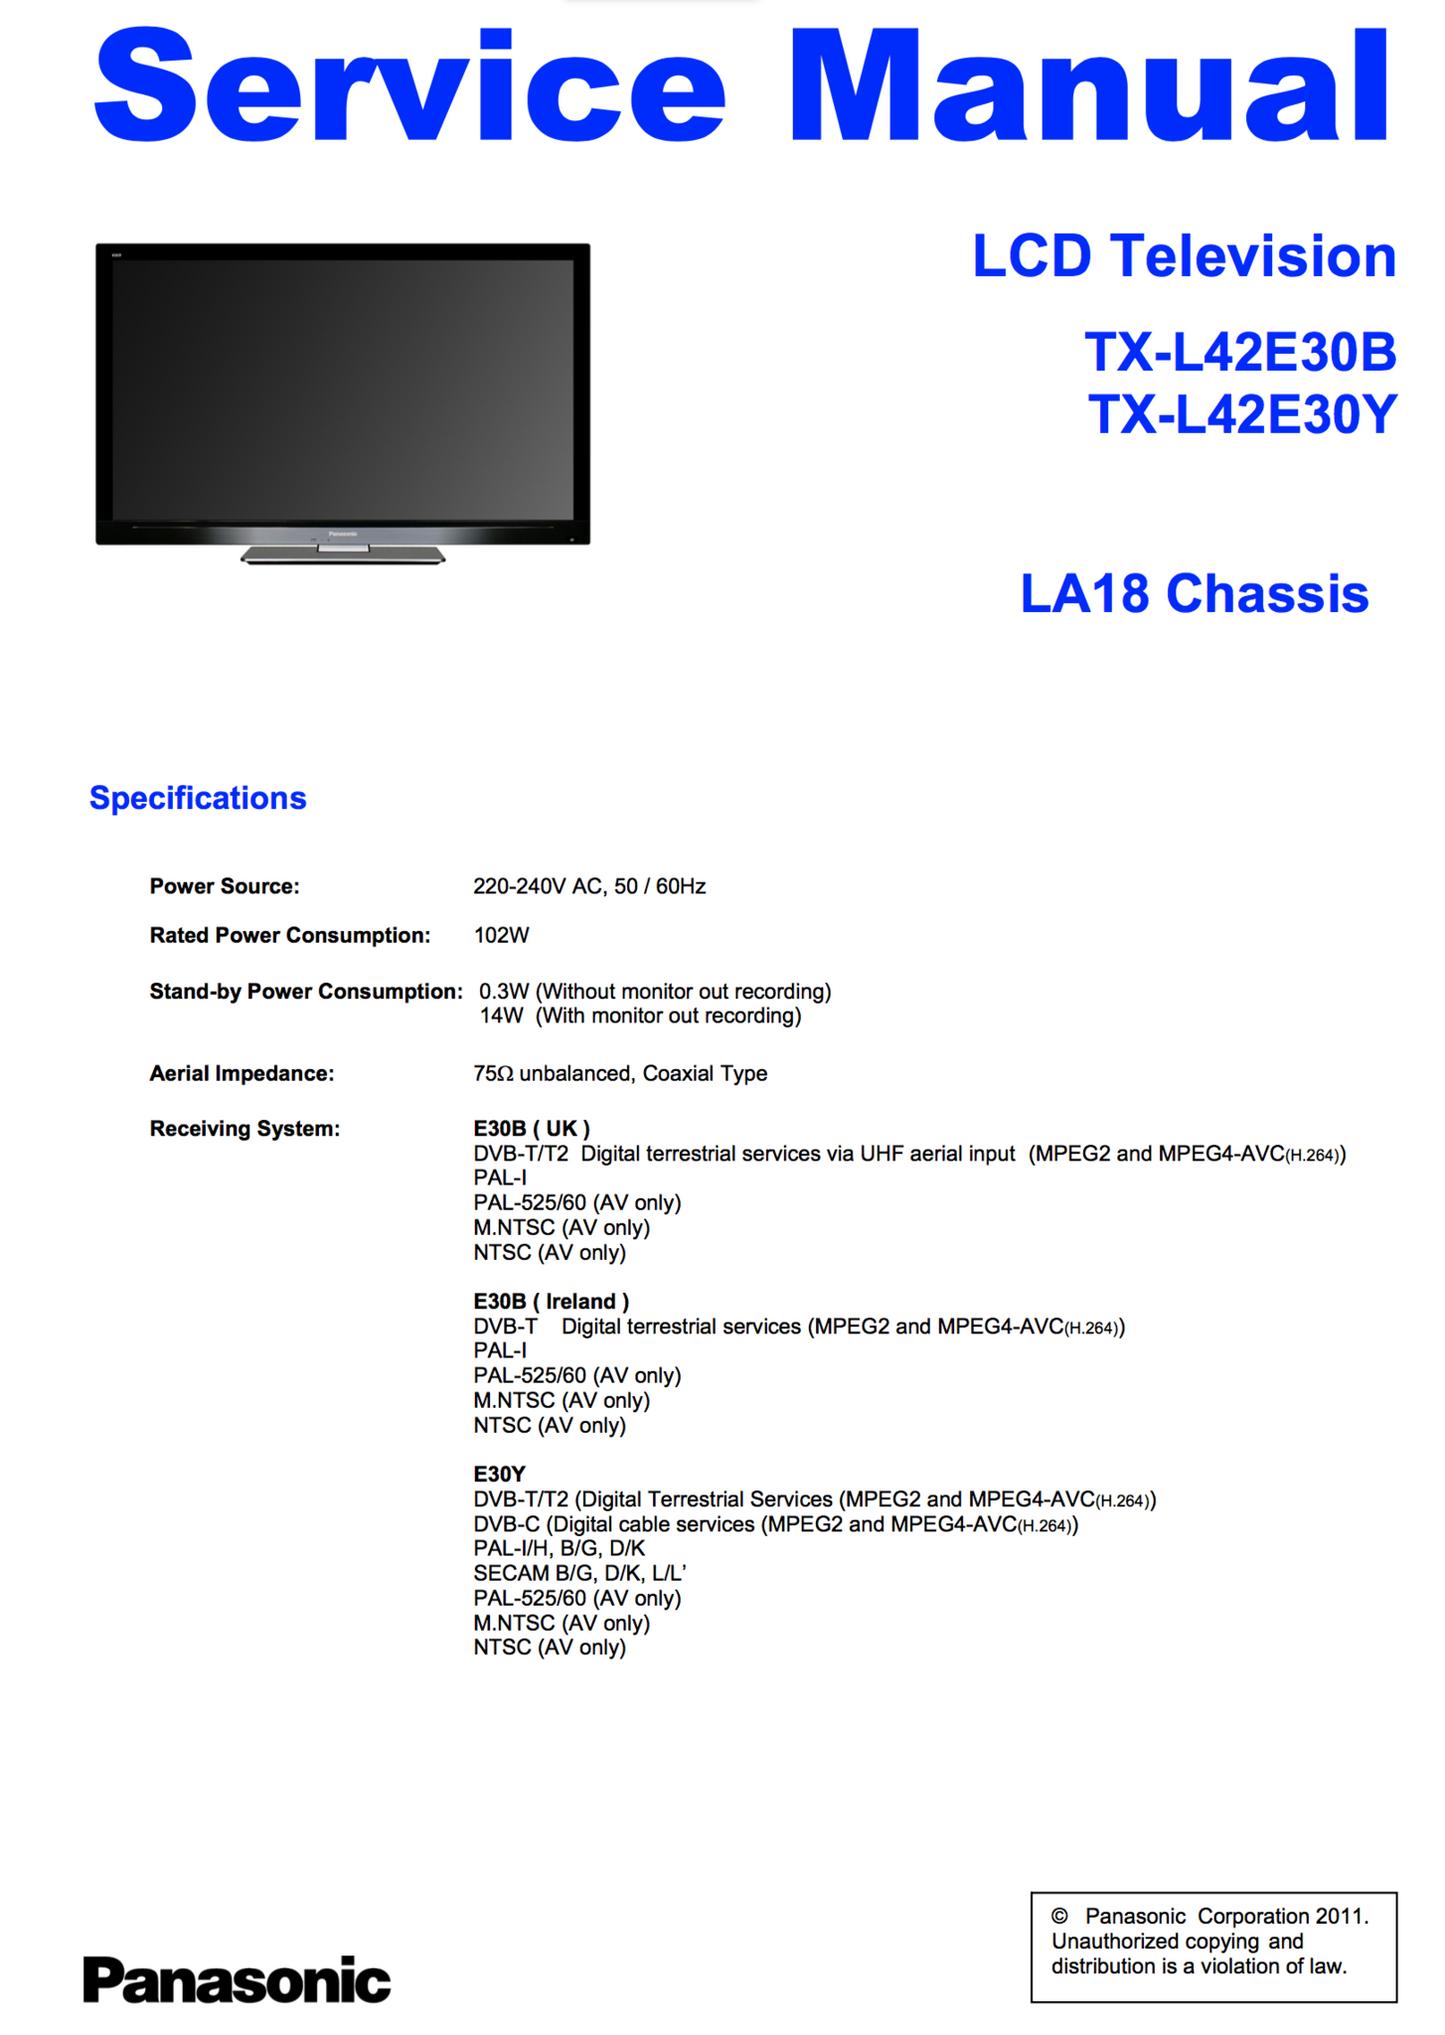 PanasonicTX-L42E30B TX-L42E30Y Service Manual